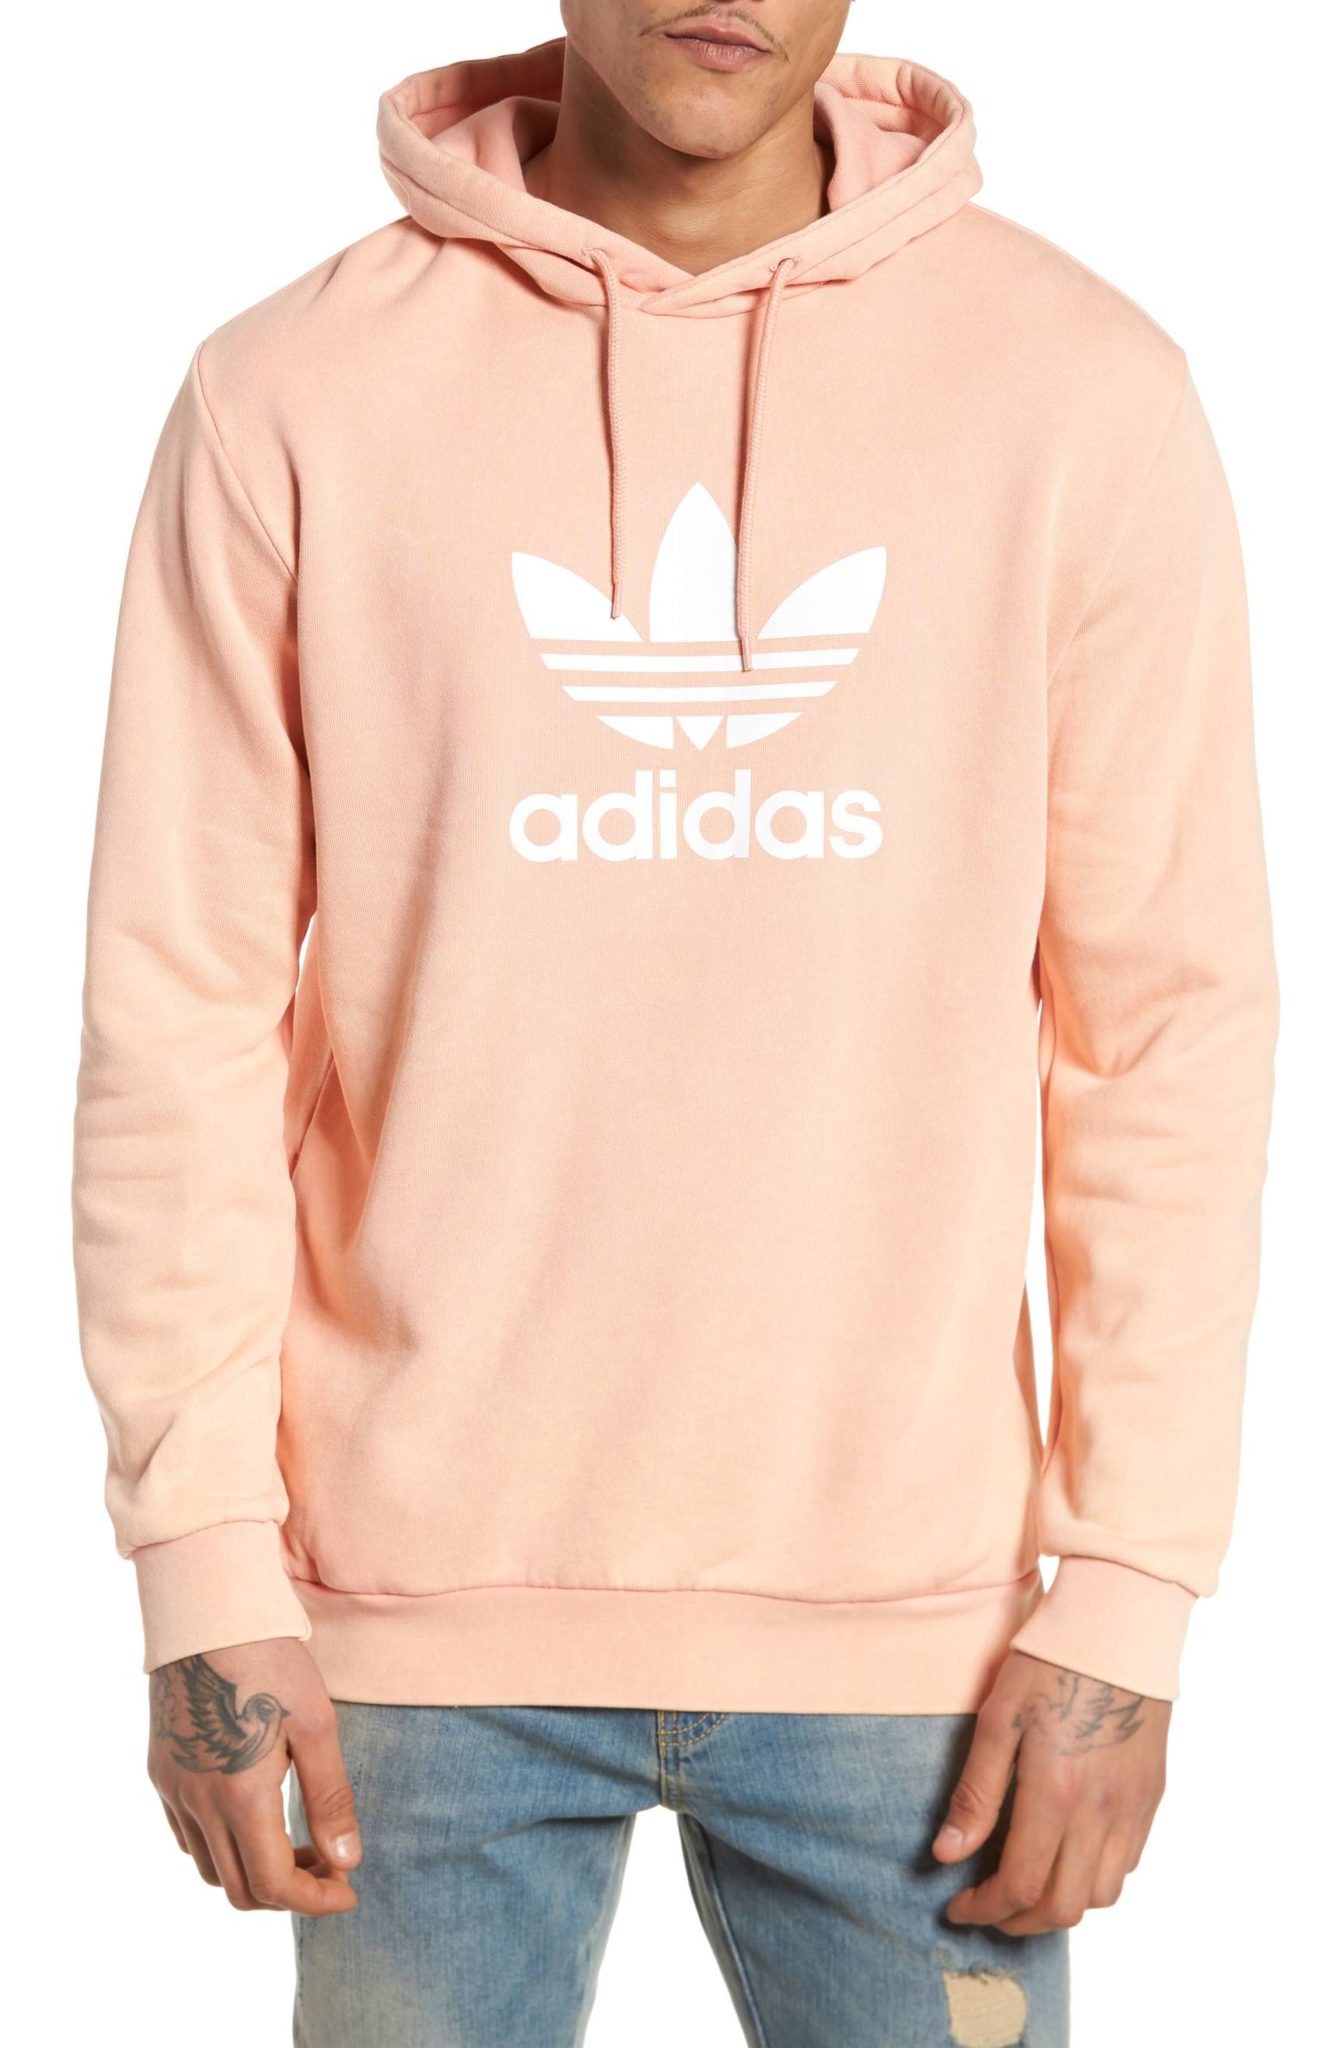 Best Sweatshirts for Men 2018: Pink Adidas Hoodies 2022